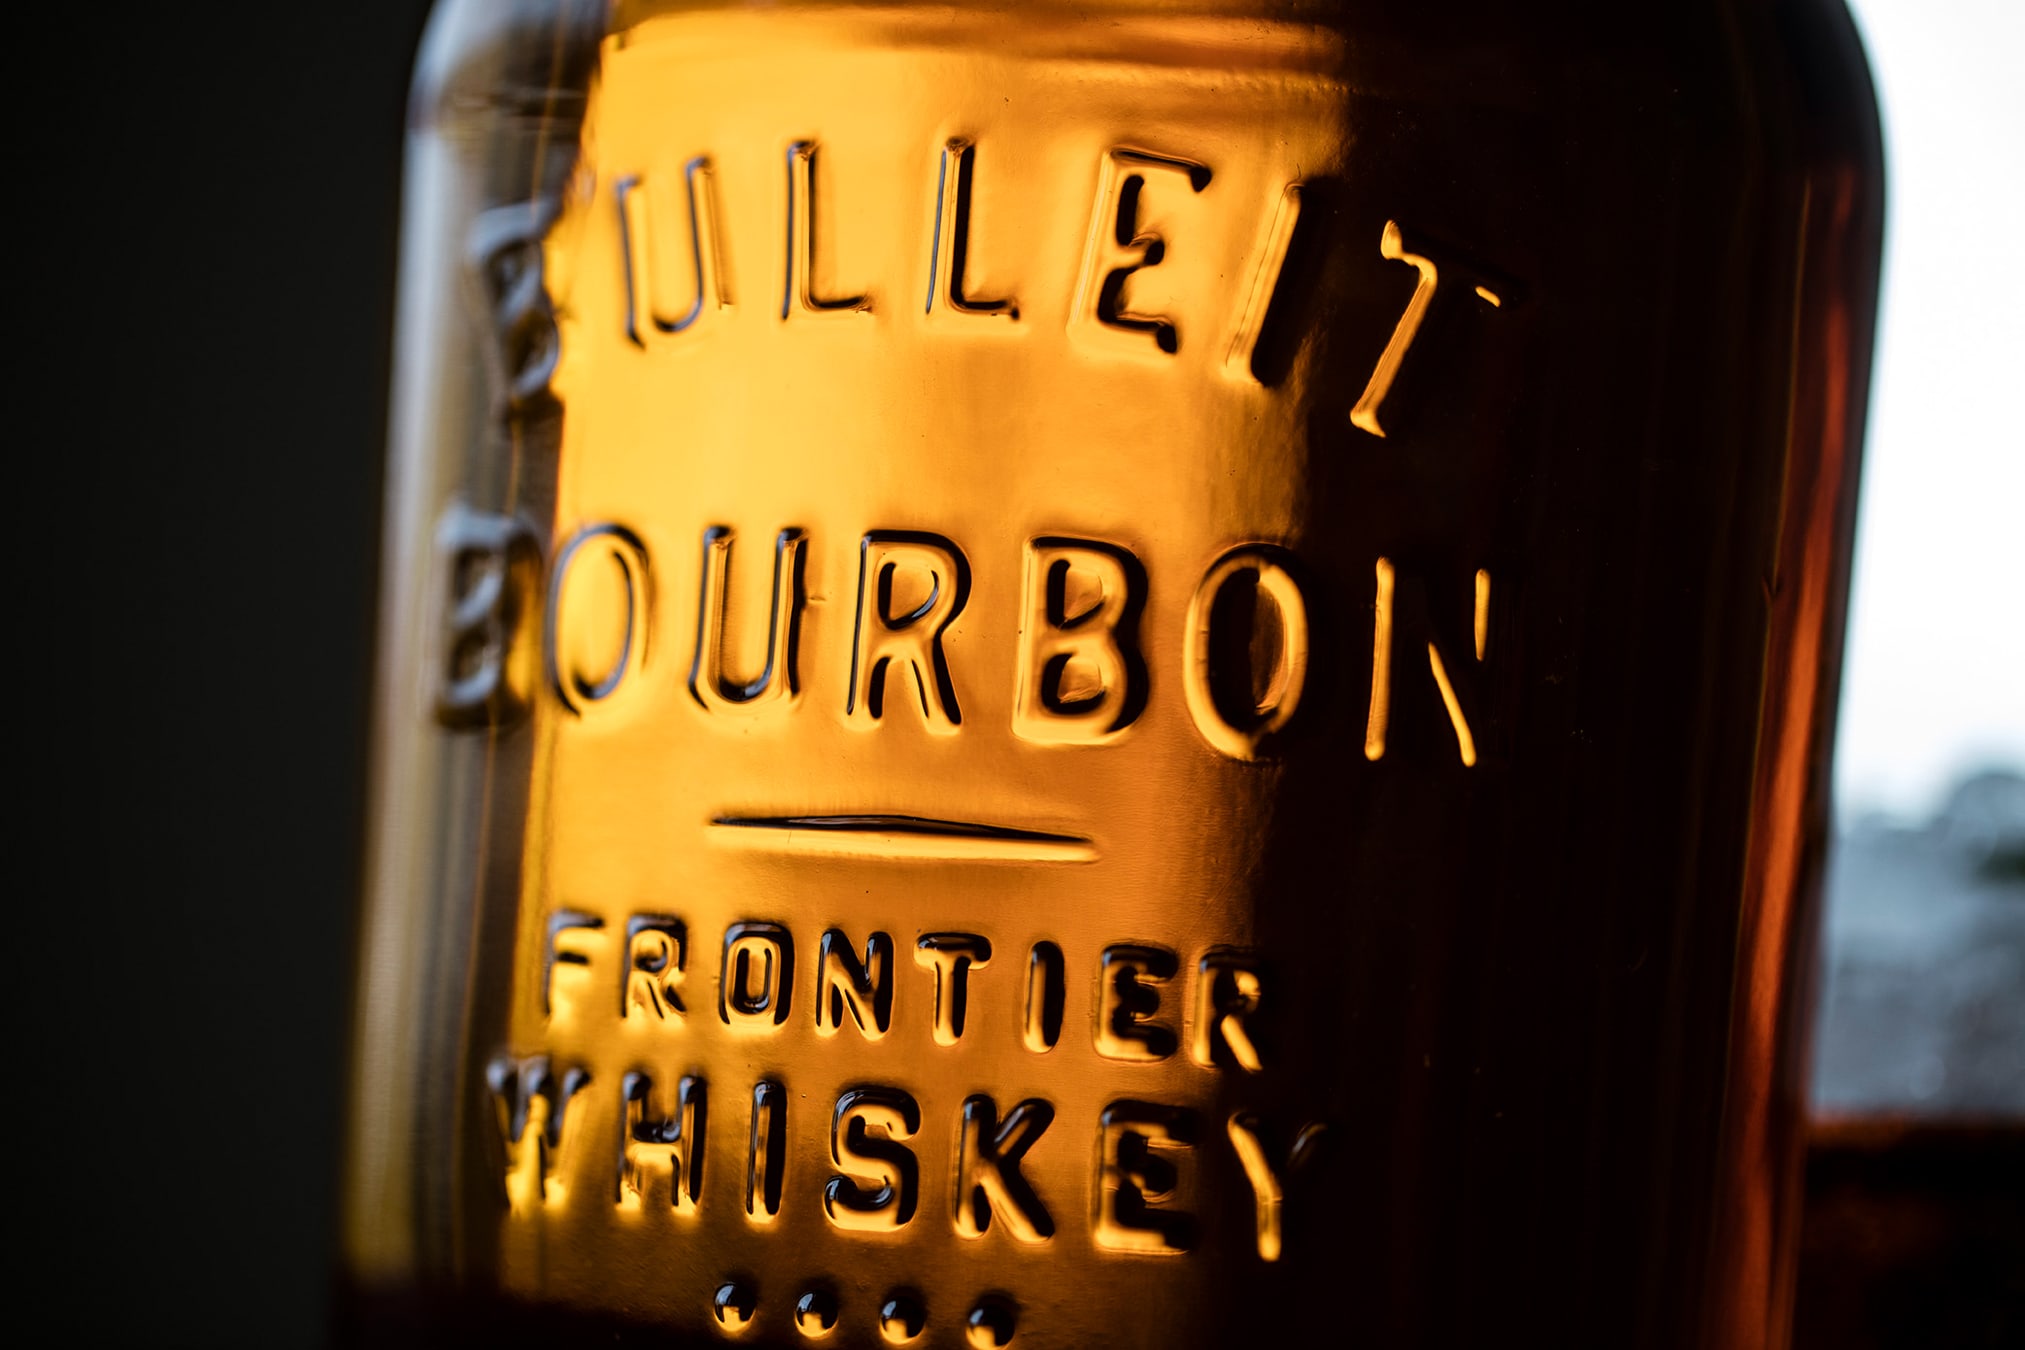 Bulleit Bourbon bottle design type detail